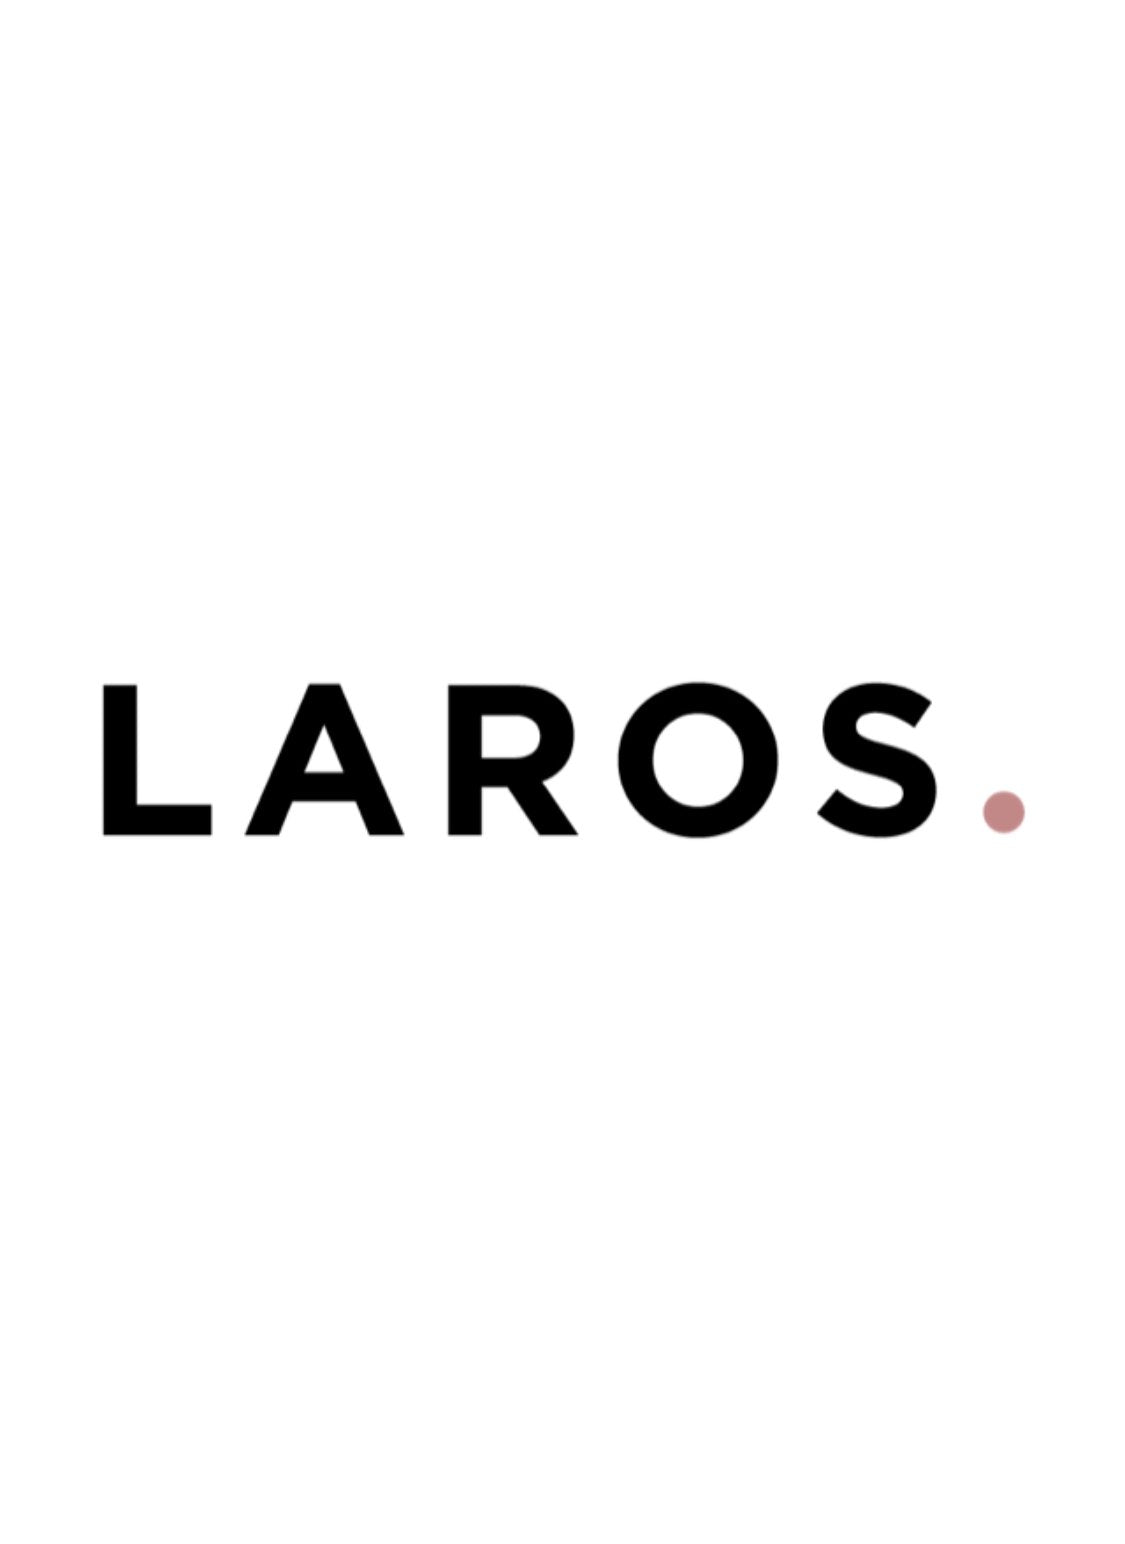 laros official